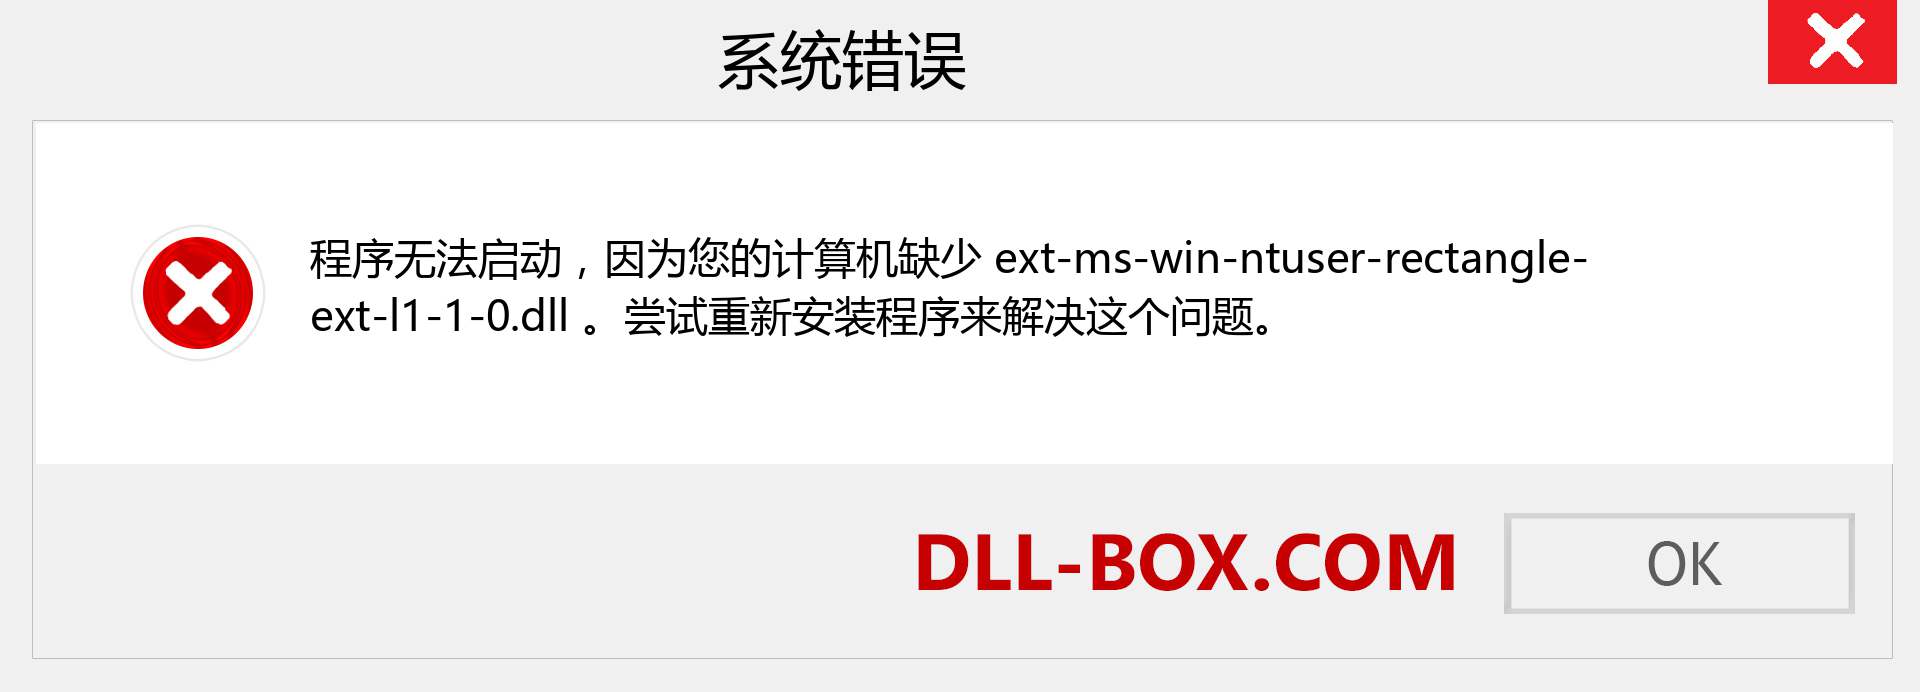 ext-ms-win-ntuser-rectangle-ext-l1-1-0.dll 文件丢失？。 适用于 Windows 7、8、10 的下载 - 修复 Windows、照片、图像上的 ext-ms-win-ntuser-rectangle-ext-l1-1-0 dll 丢失错误